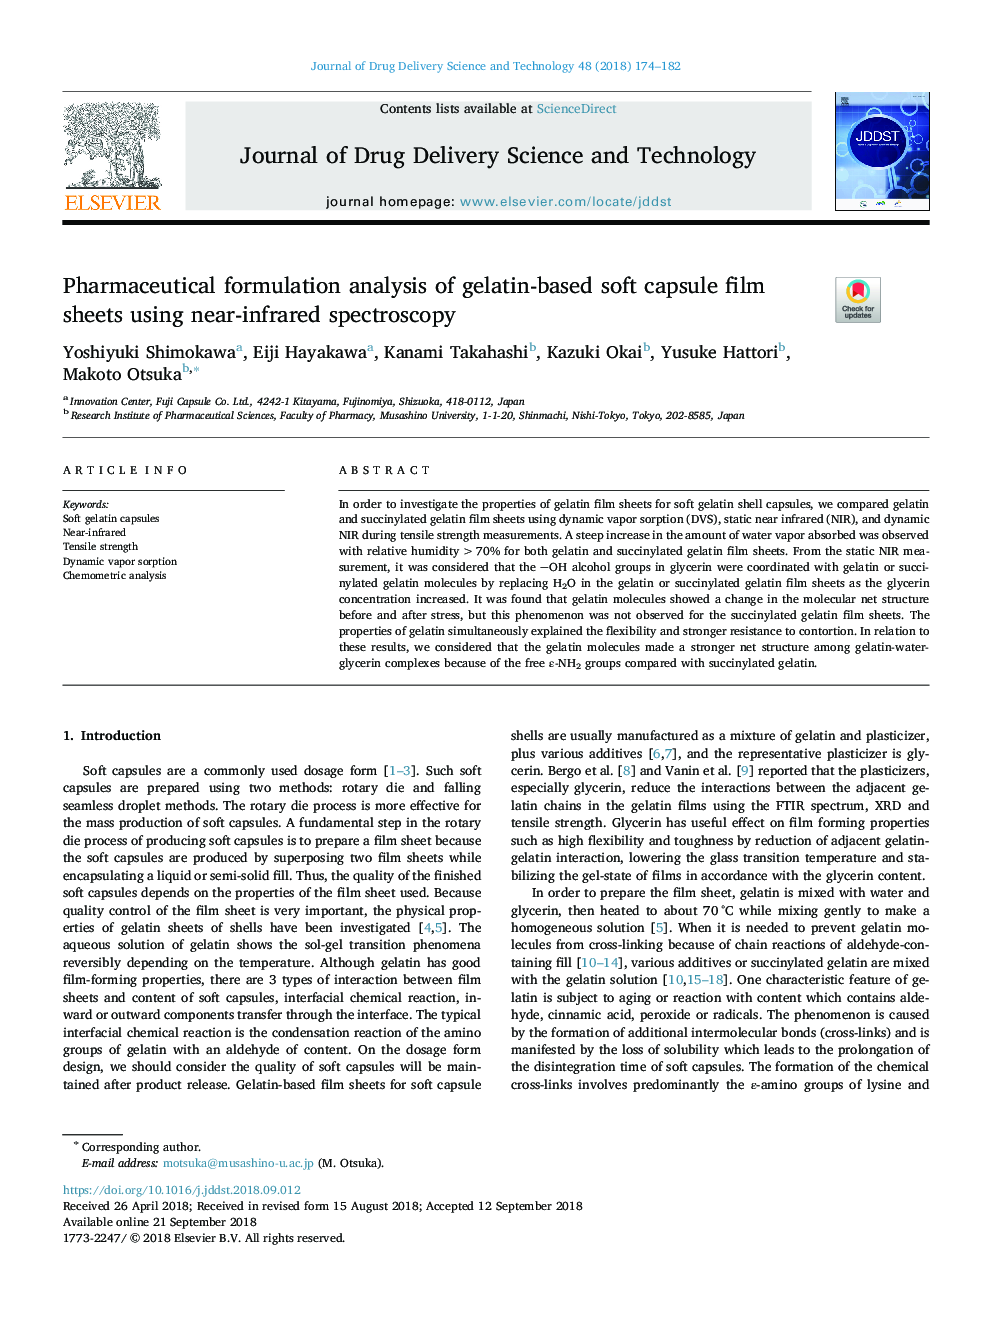 Pharmaceutical formulation analysis of gelatin-based soft capsule film sheets using near-infrared spectroscopy